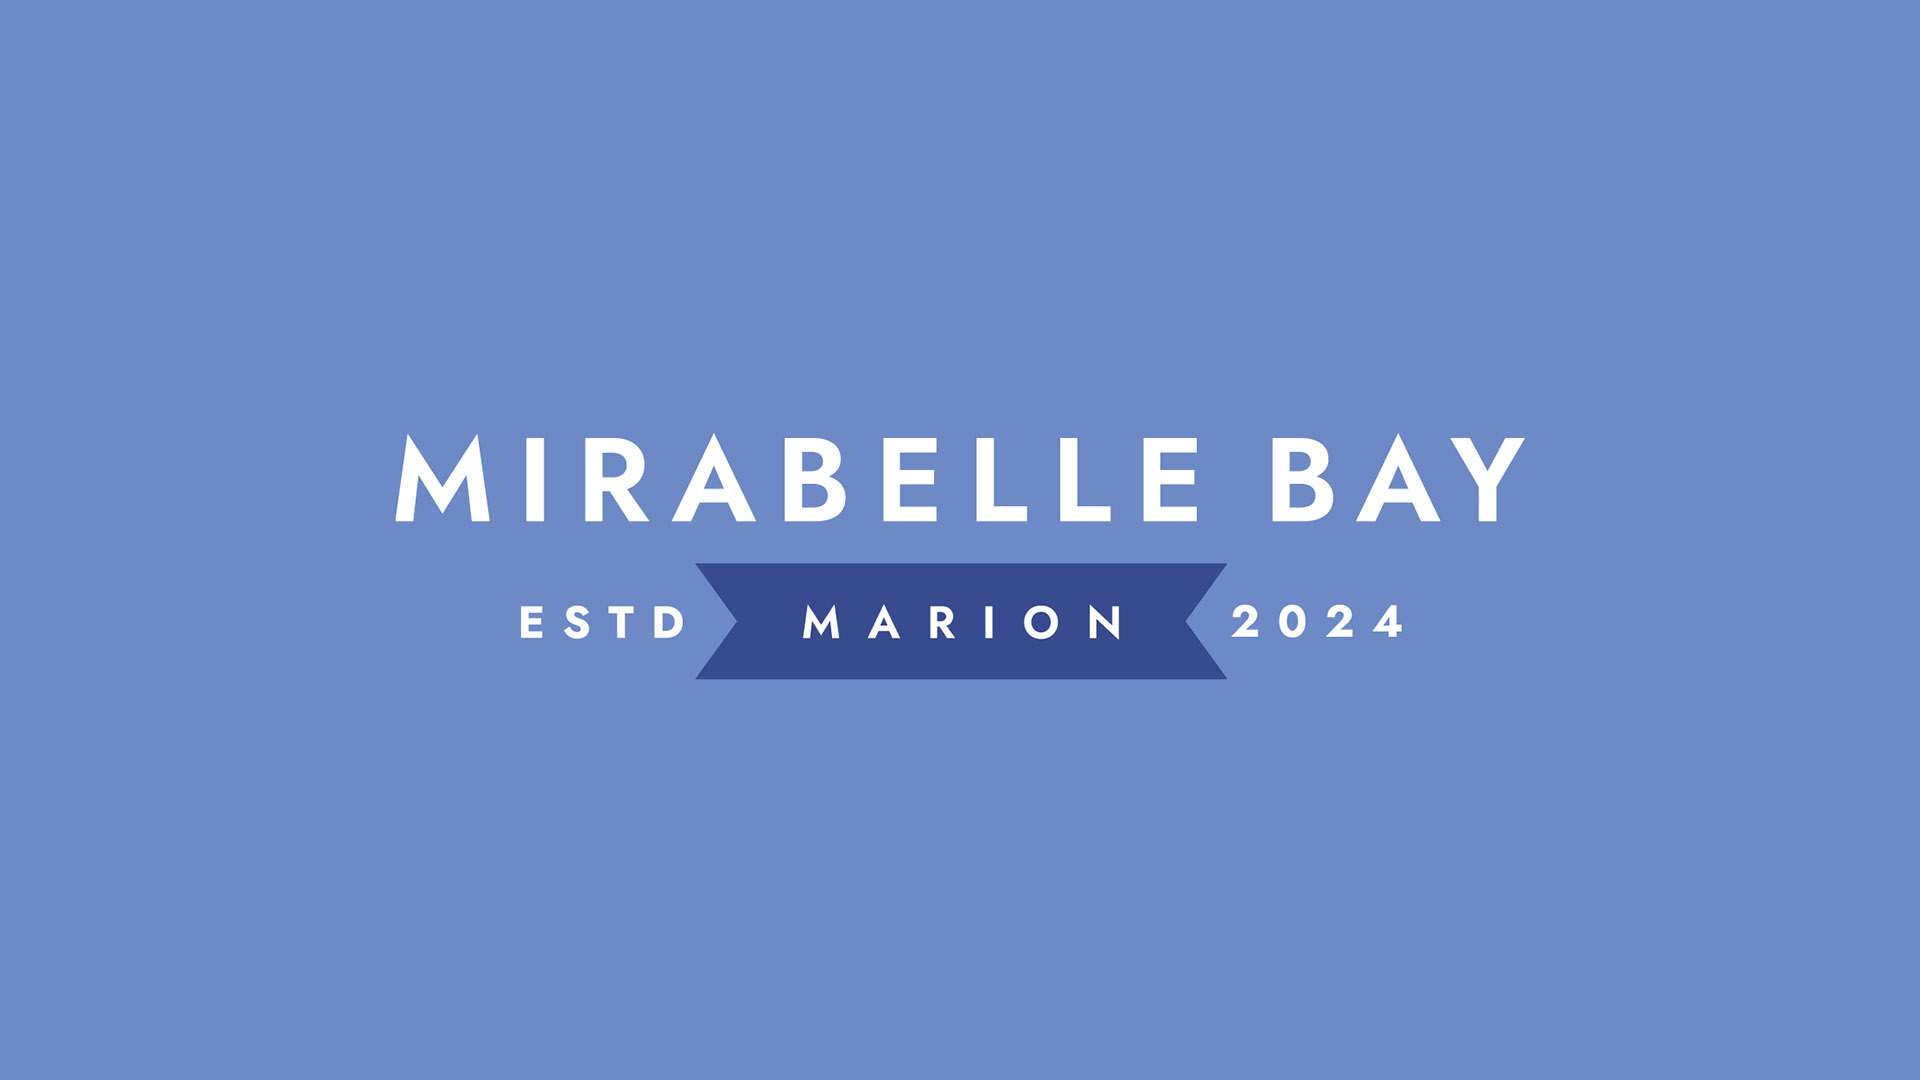 mirabelle bay web logo on lavendar